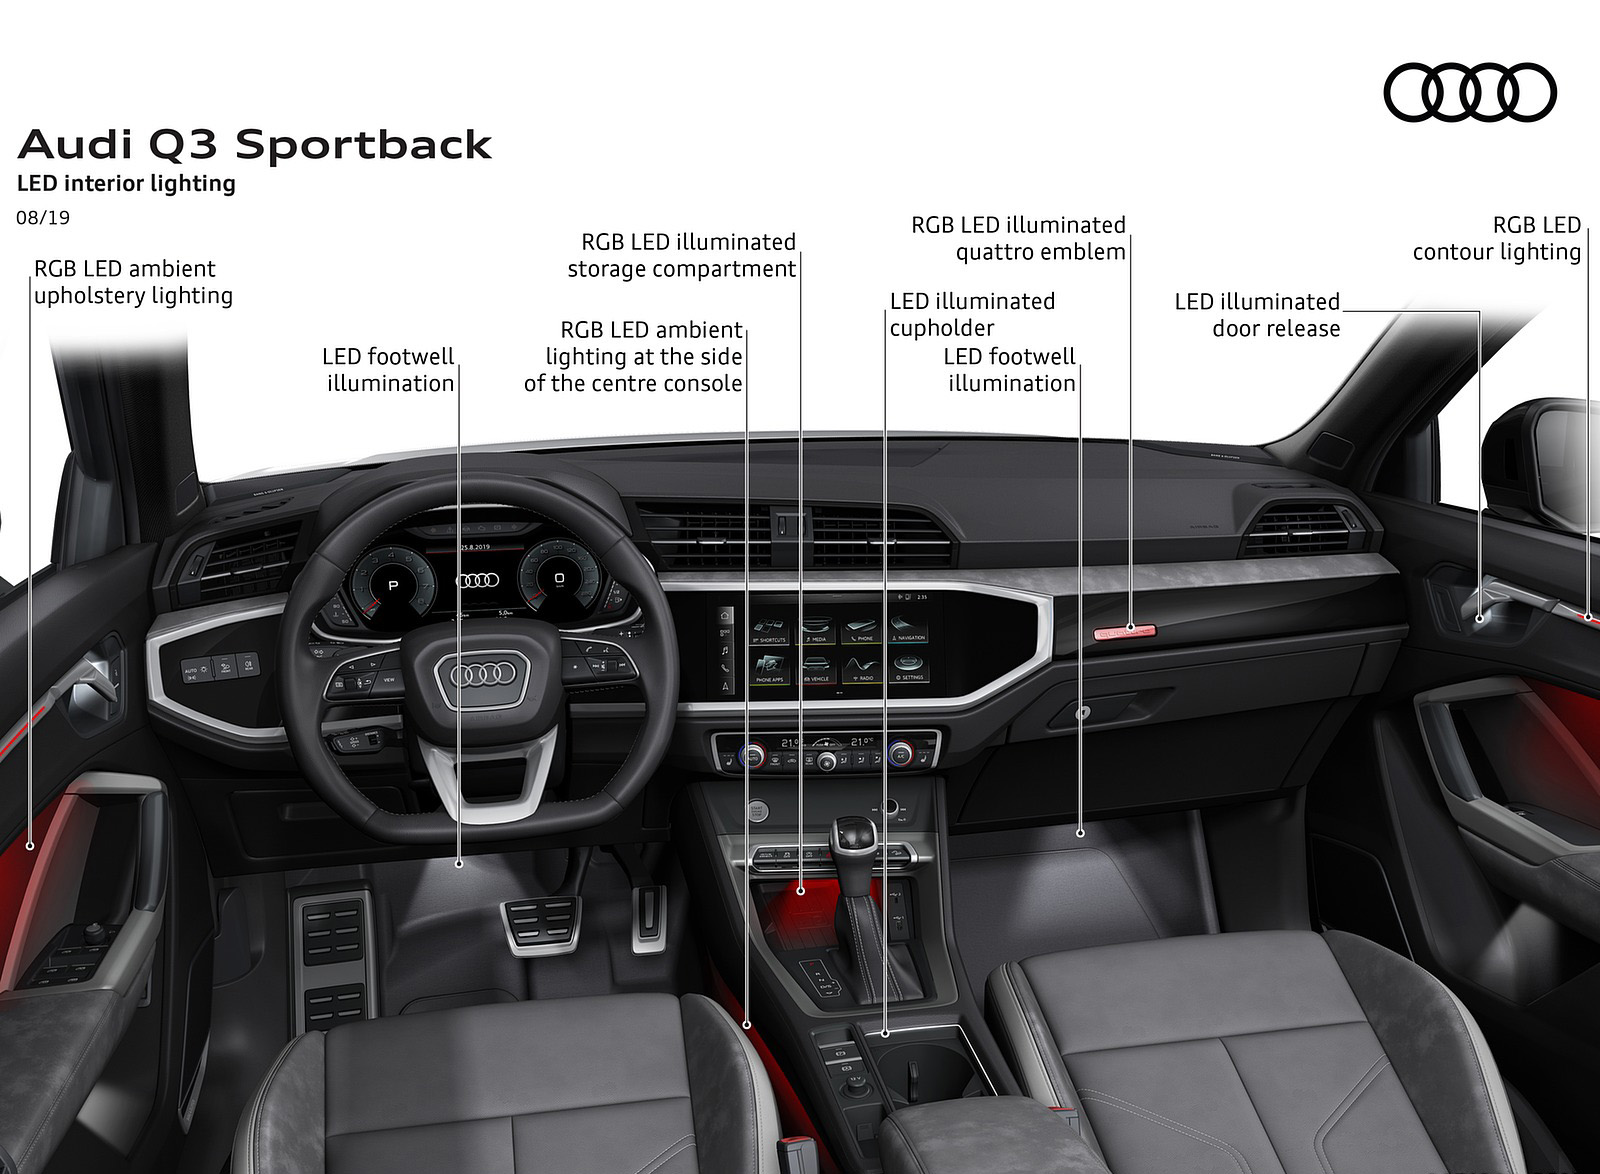 2020 Audi Q3 Sportback LED interior lighting Wallpapers #269 of 285